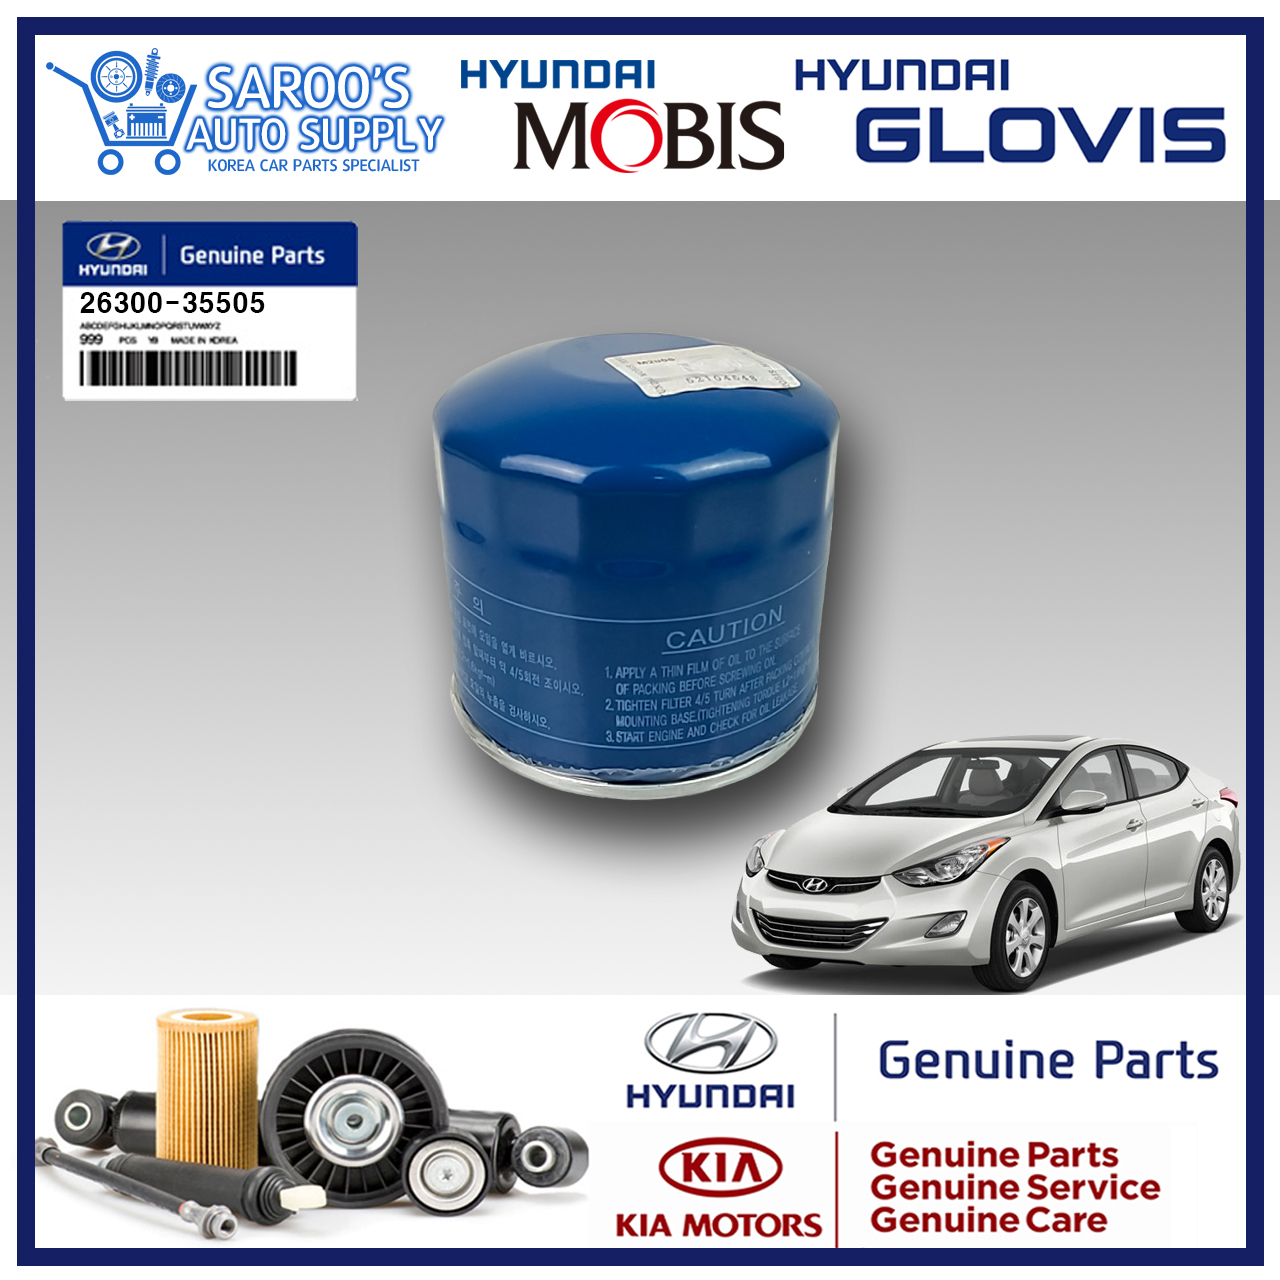 Hyundai Elantra Spare Parts Philippines Reviewmotors.co